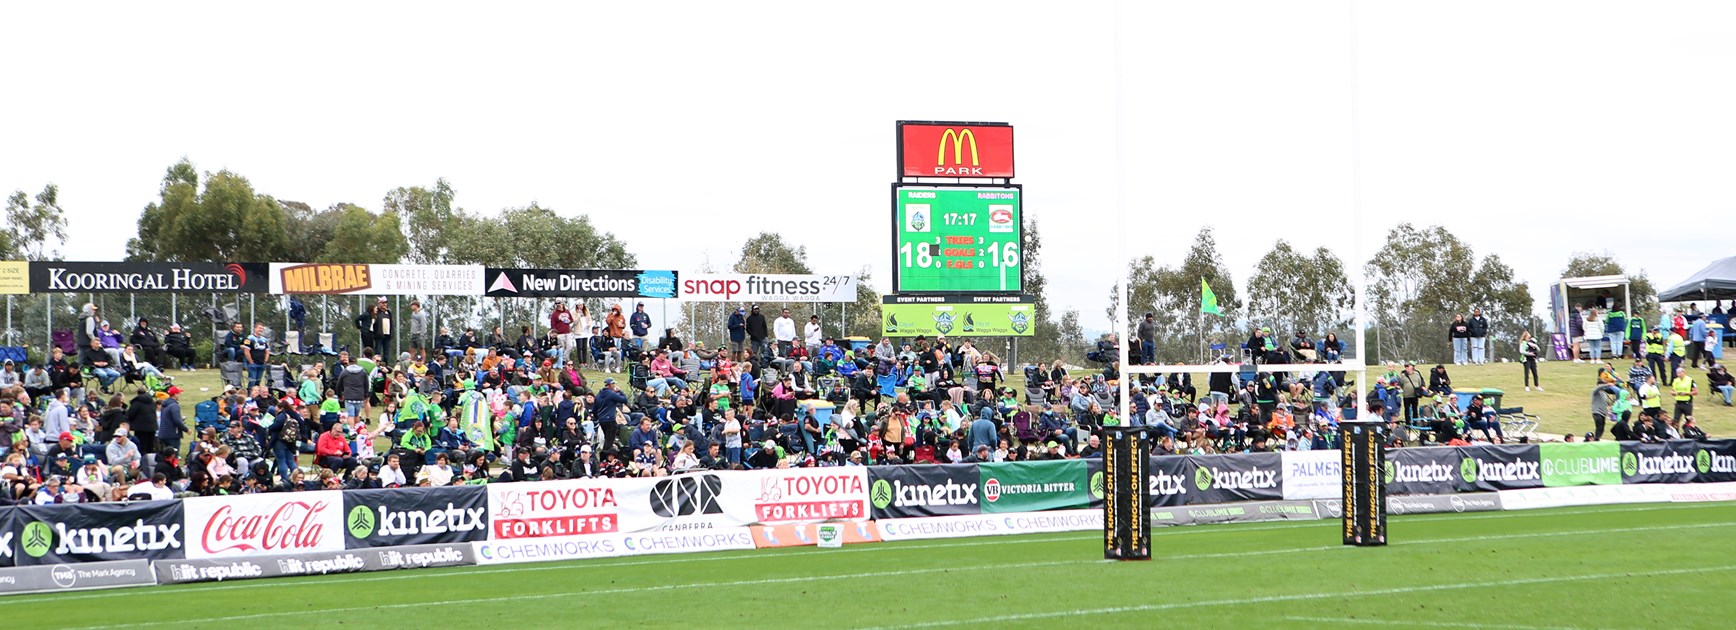 Canberra Raiders NRLW trial game heading to Wagga Wagga